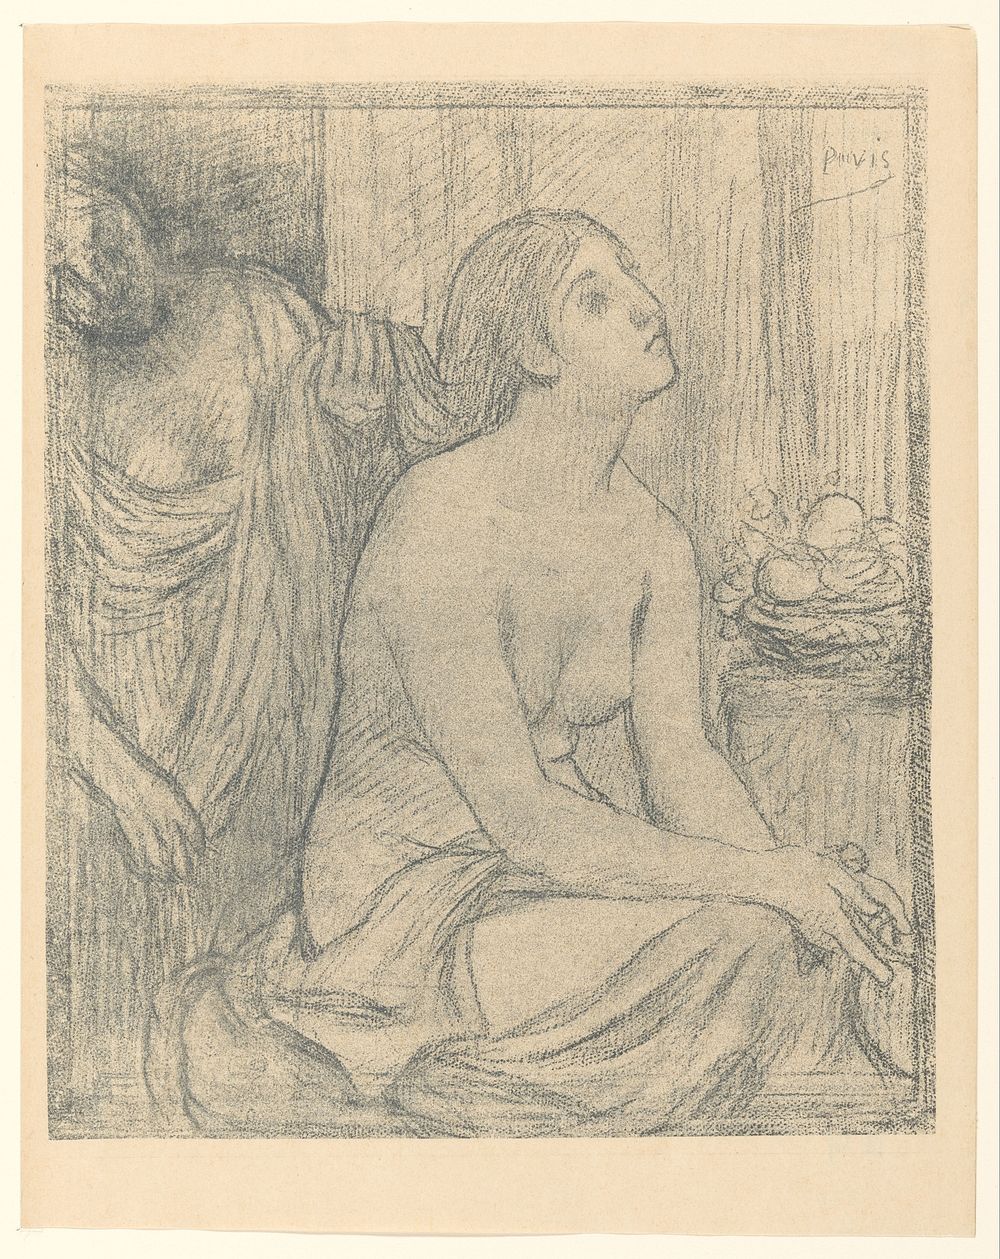 Vrouw aan haar toilet (in or after 1834 - in or before 1898) by Pierre Cécile Puvis de Chavannes